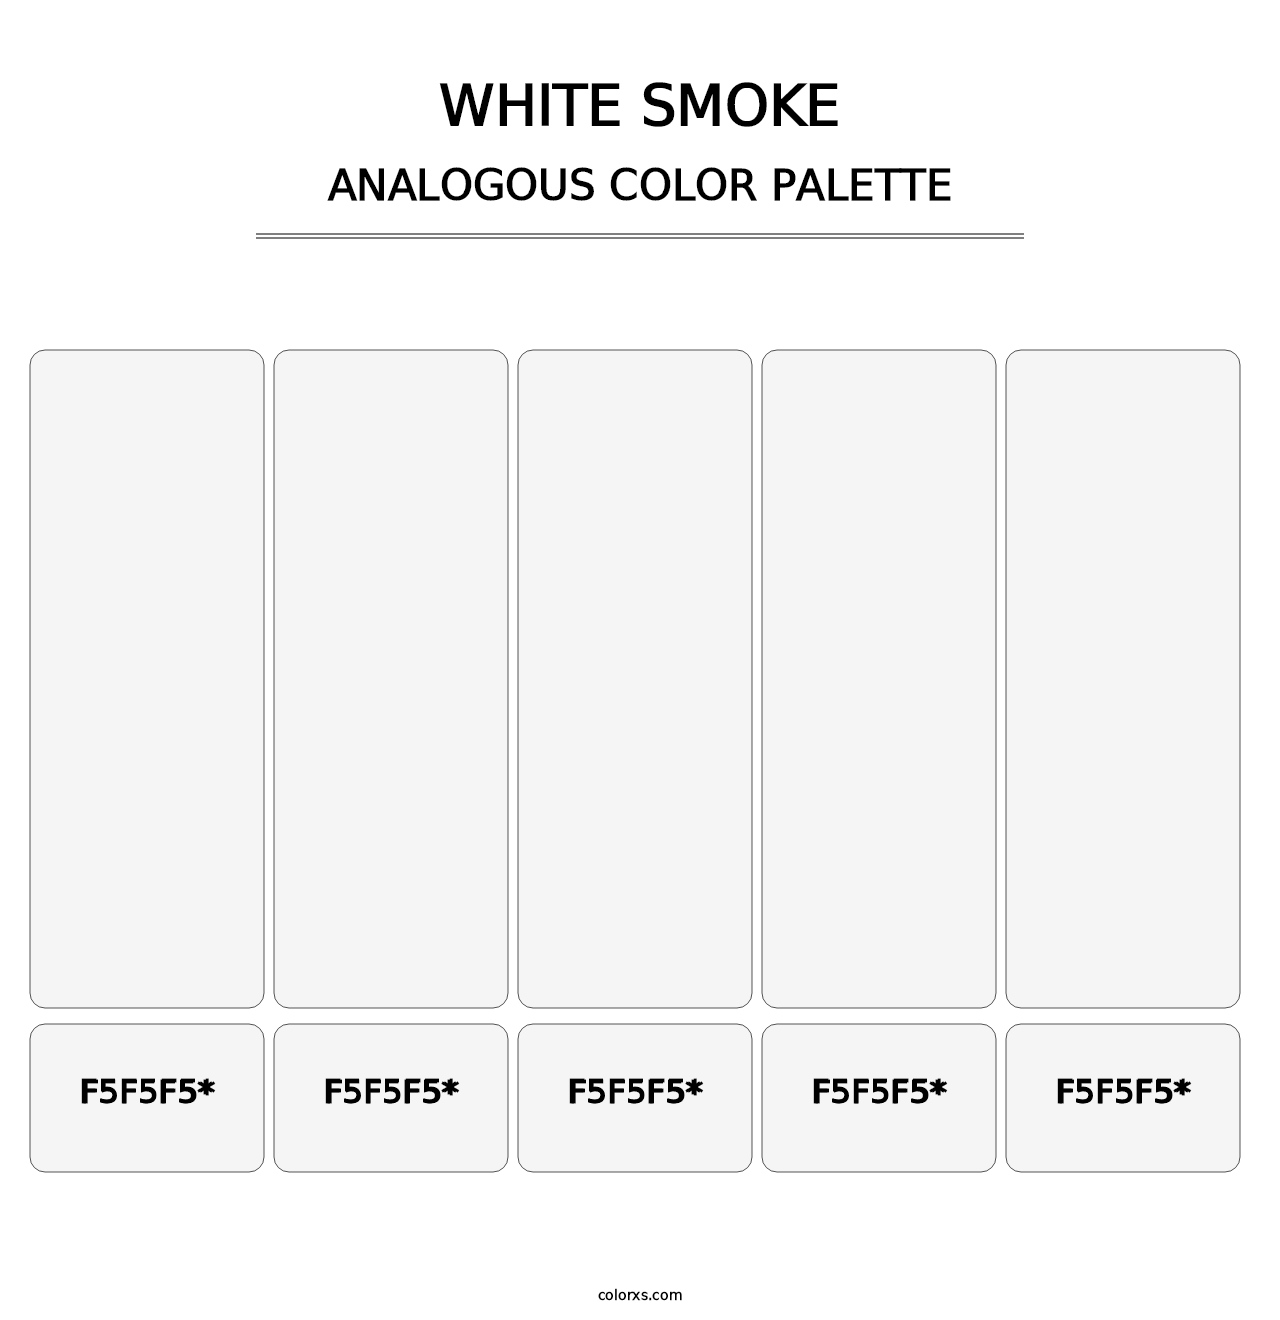 White Smoke - Analogous Color Palette